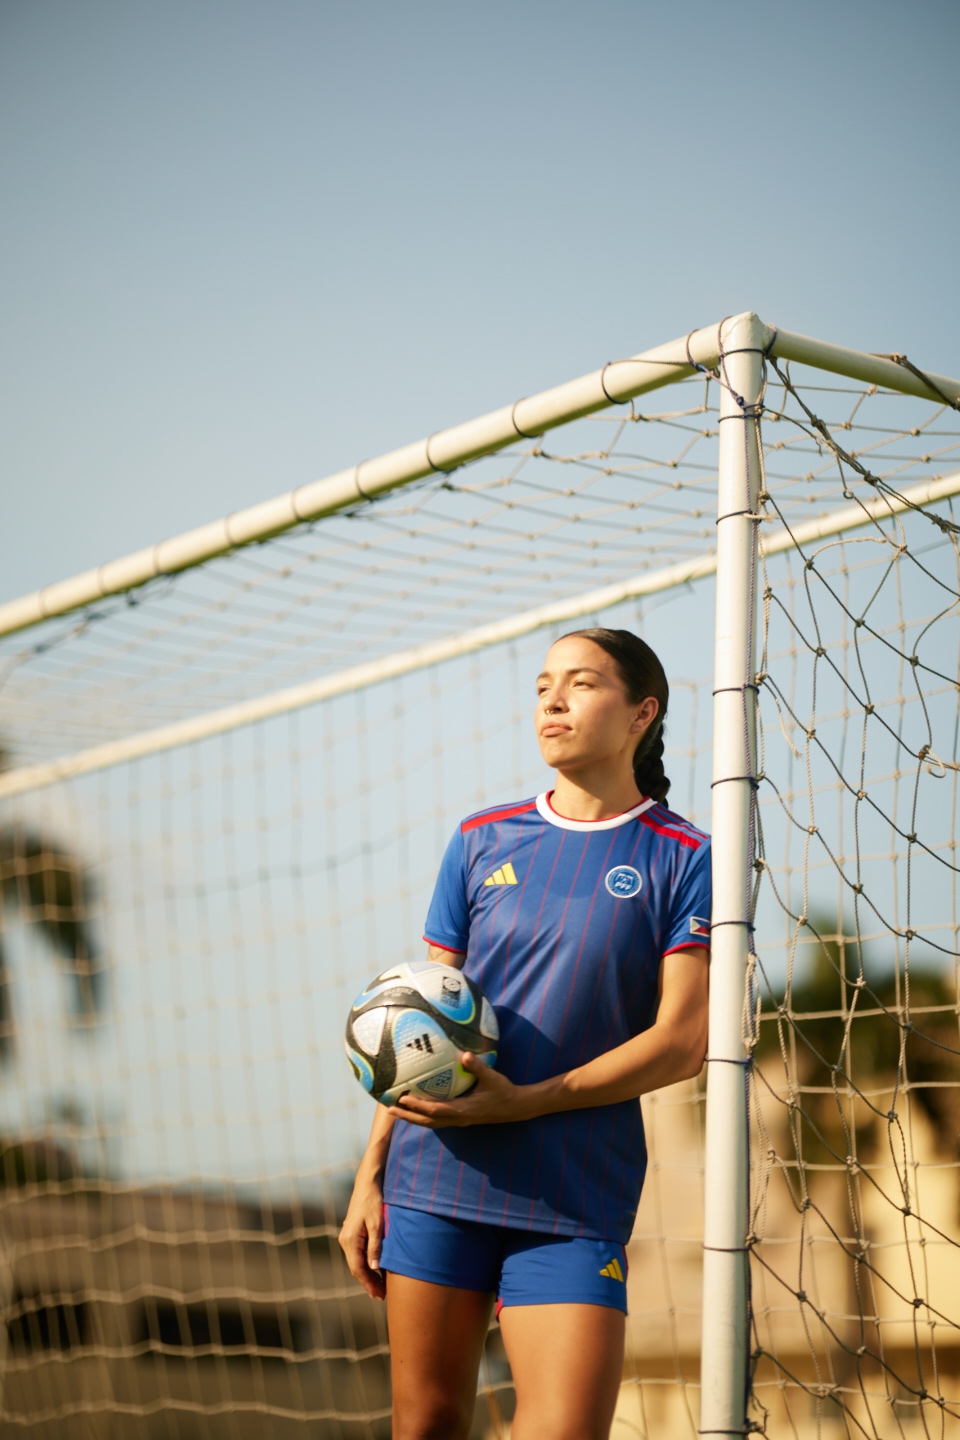 The Filipinas World Cup Kits: Hali Long wearing the Home Kit